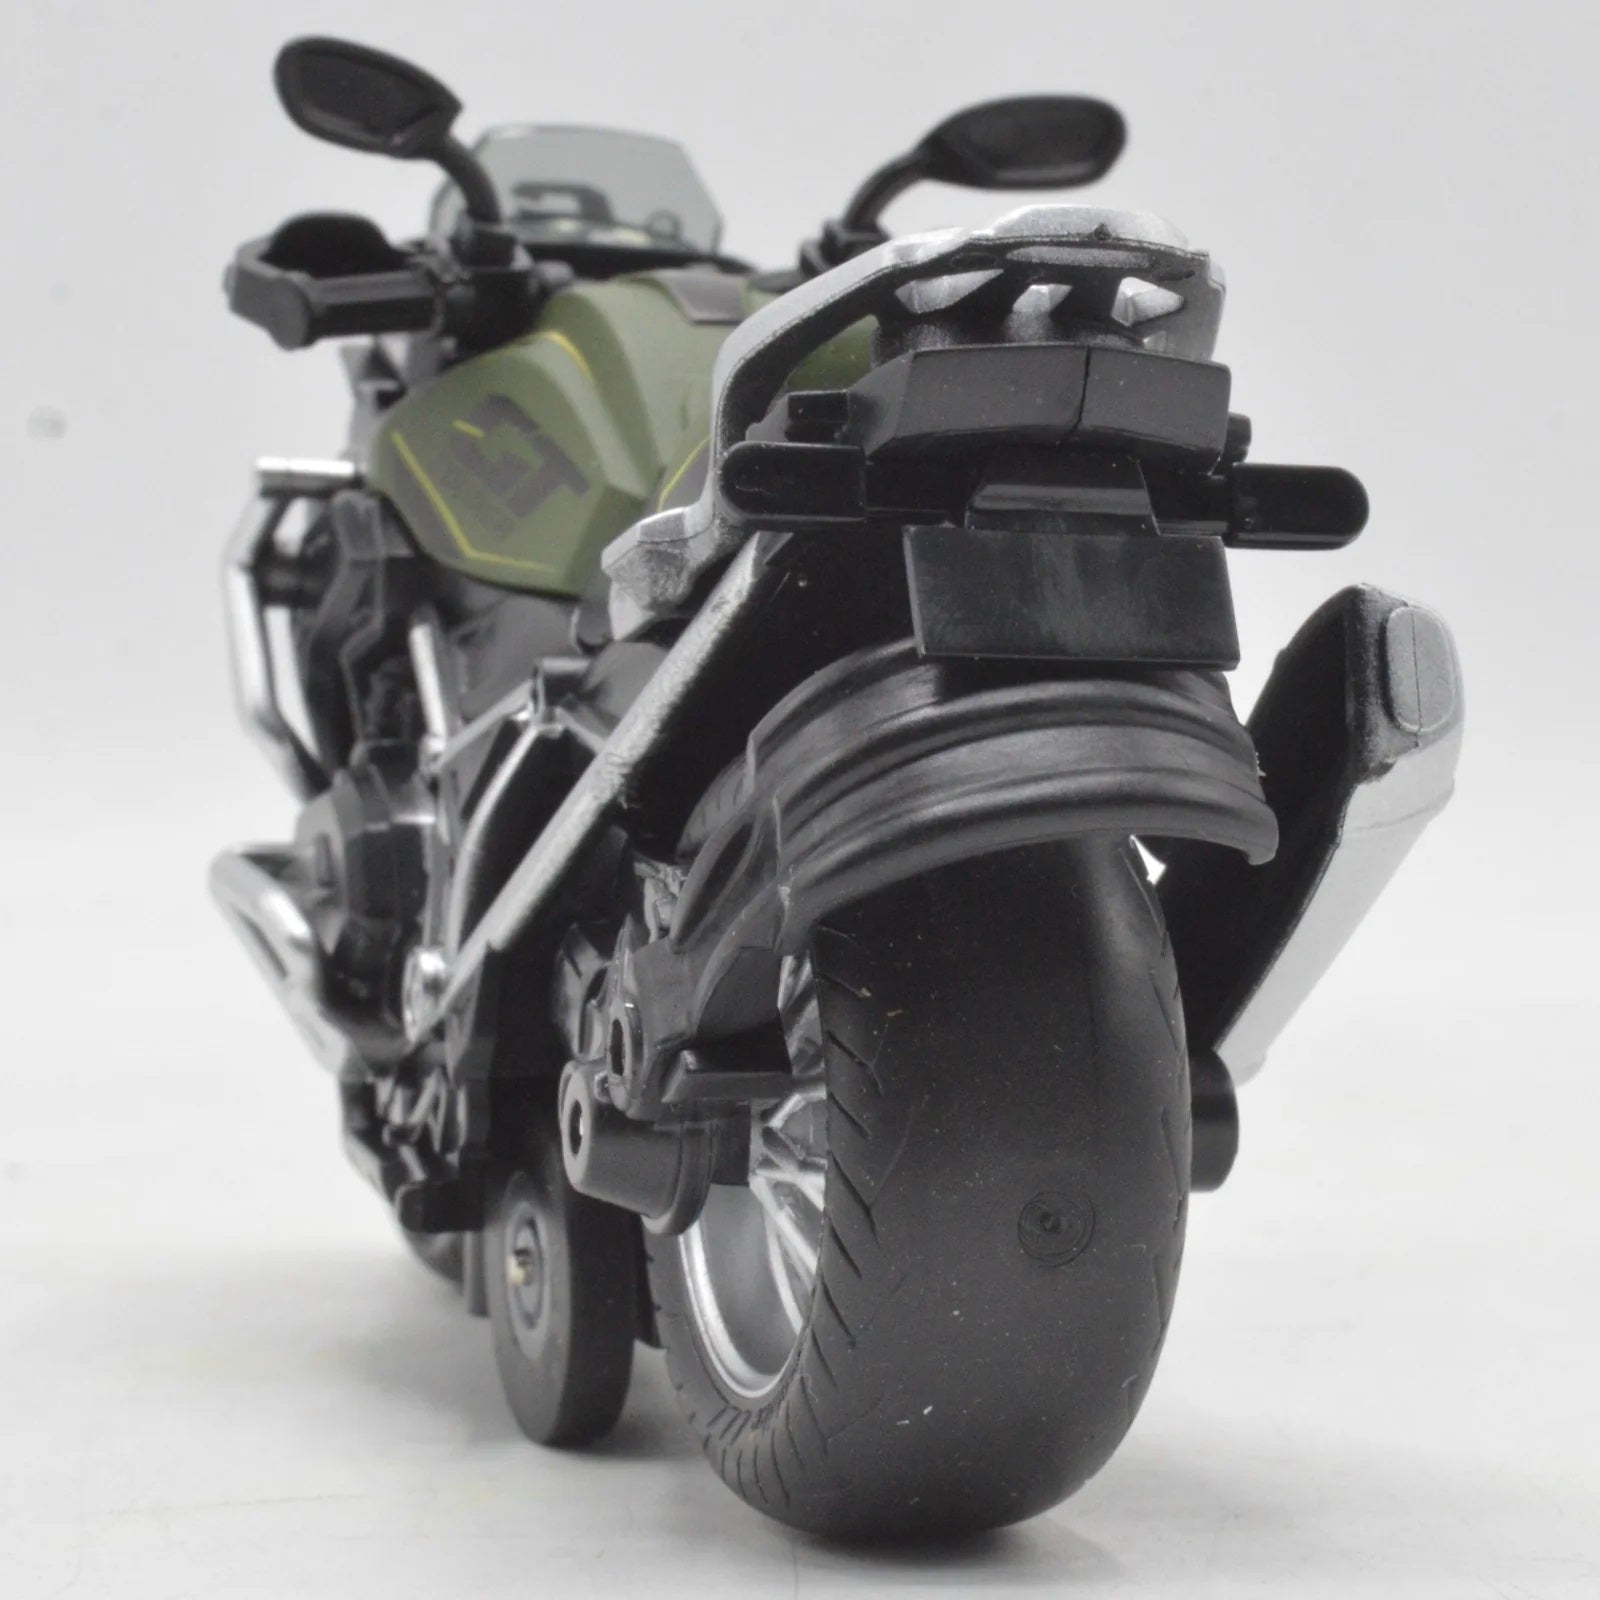 Diecast Metal Body Moto Bike with Light & Sound